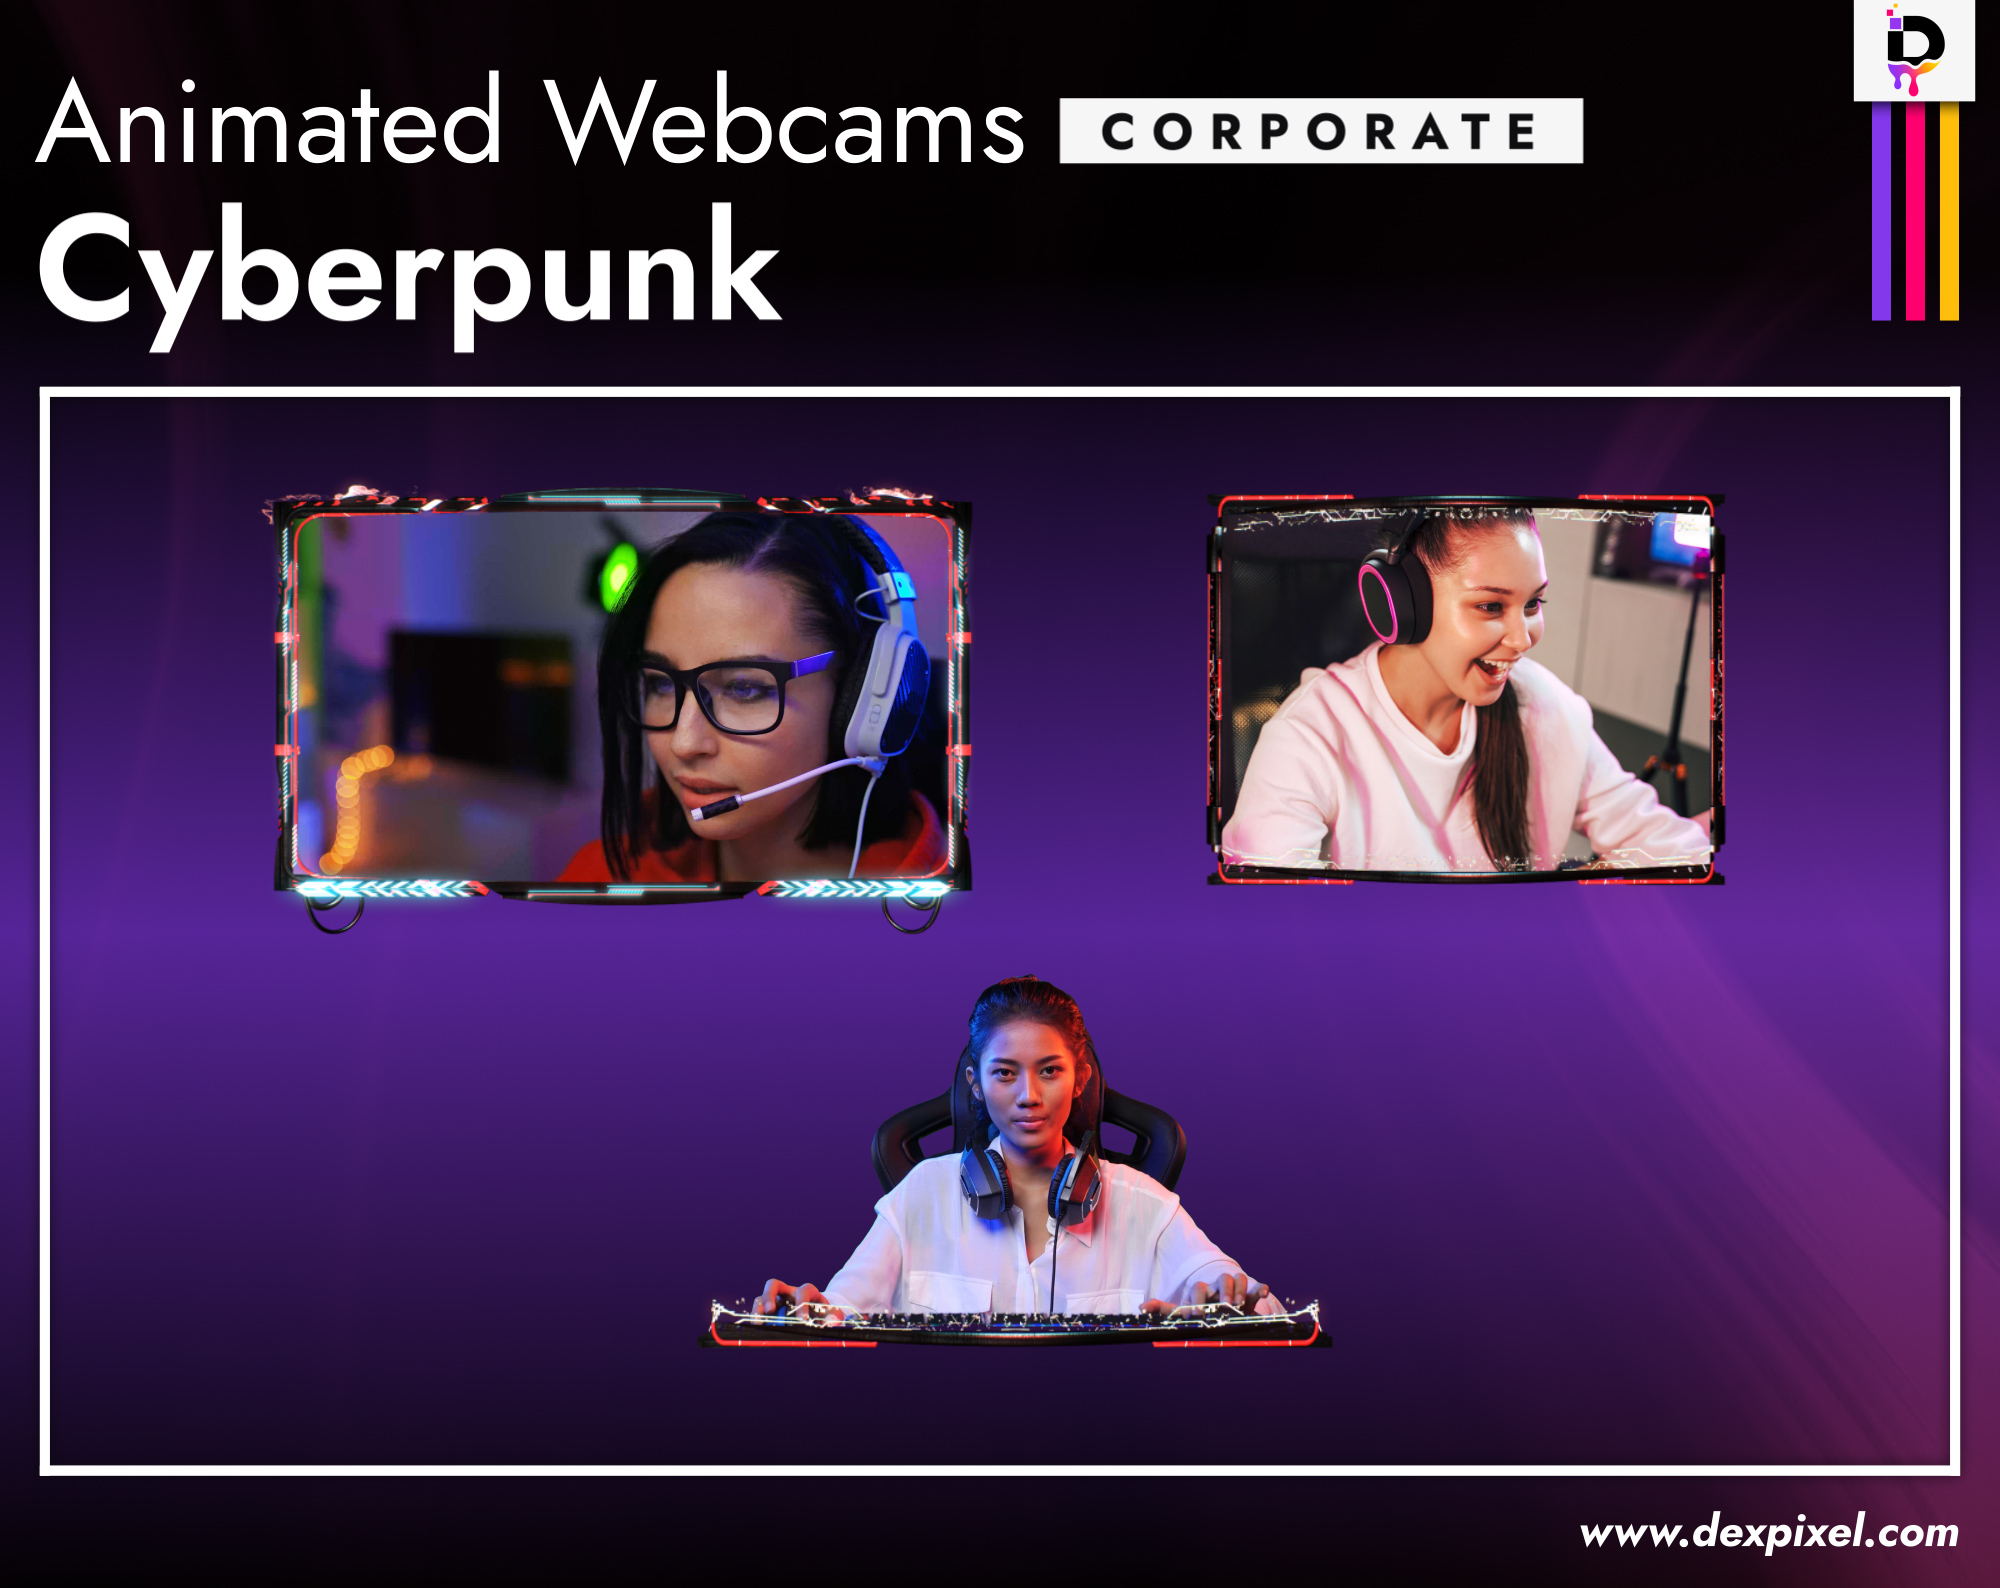 Animated Webcams Dexpixel Thumbnail Cyberpunk Corporate